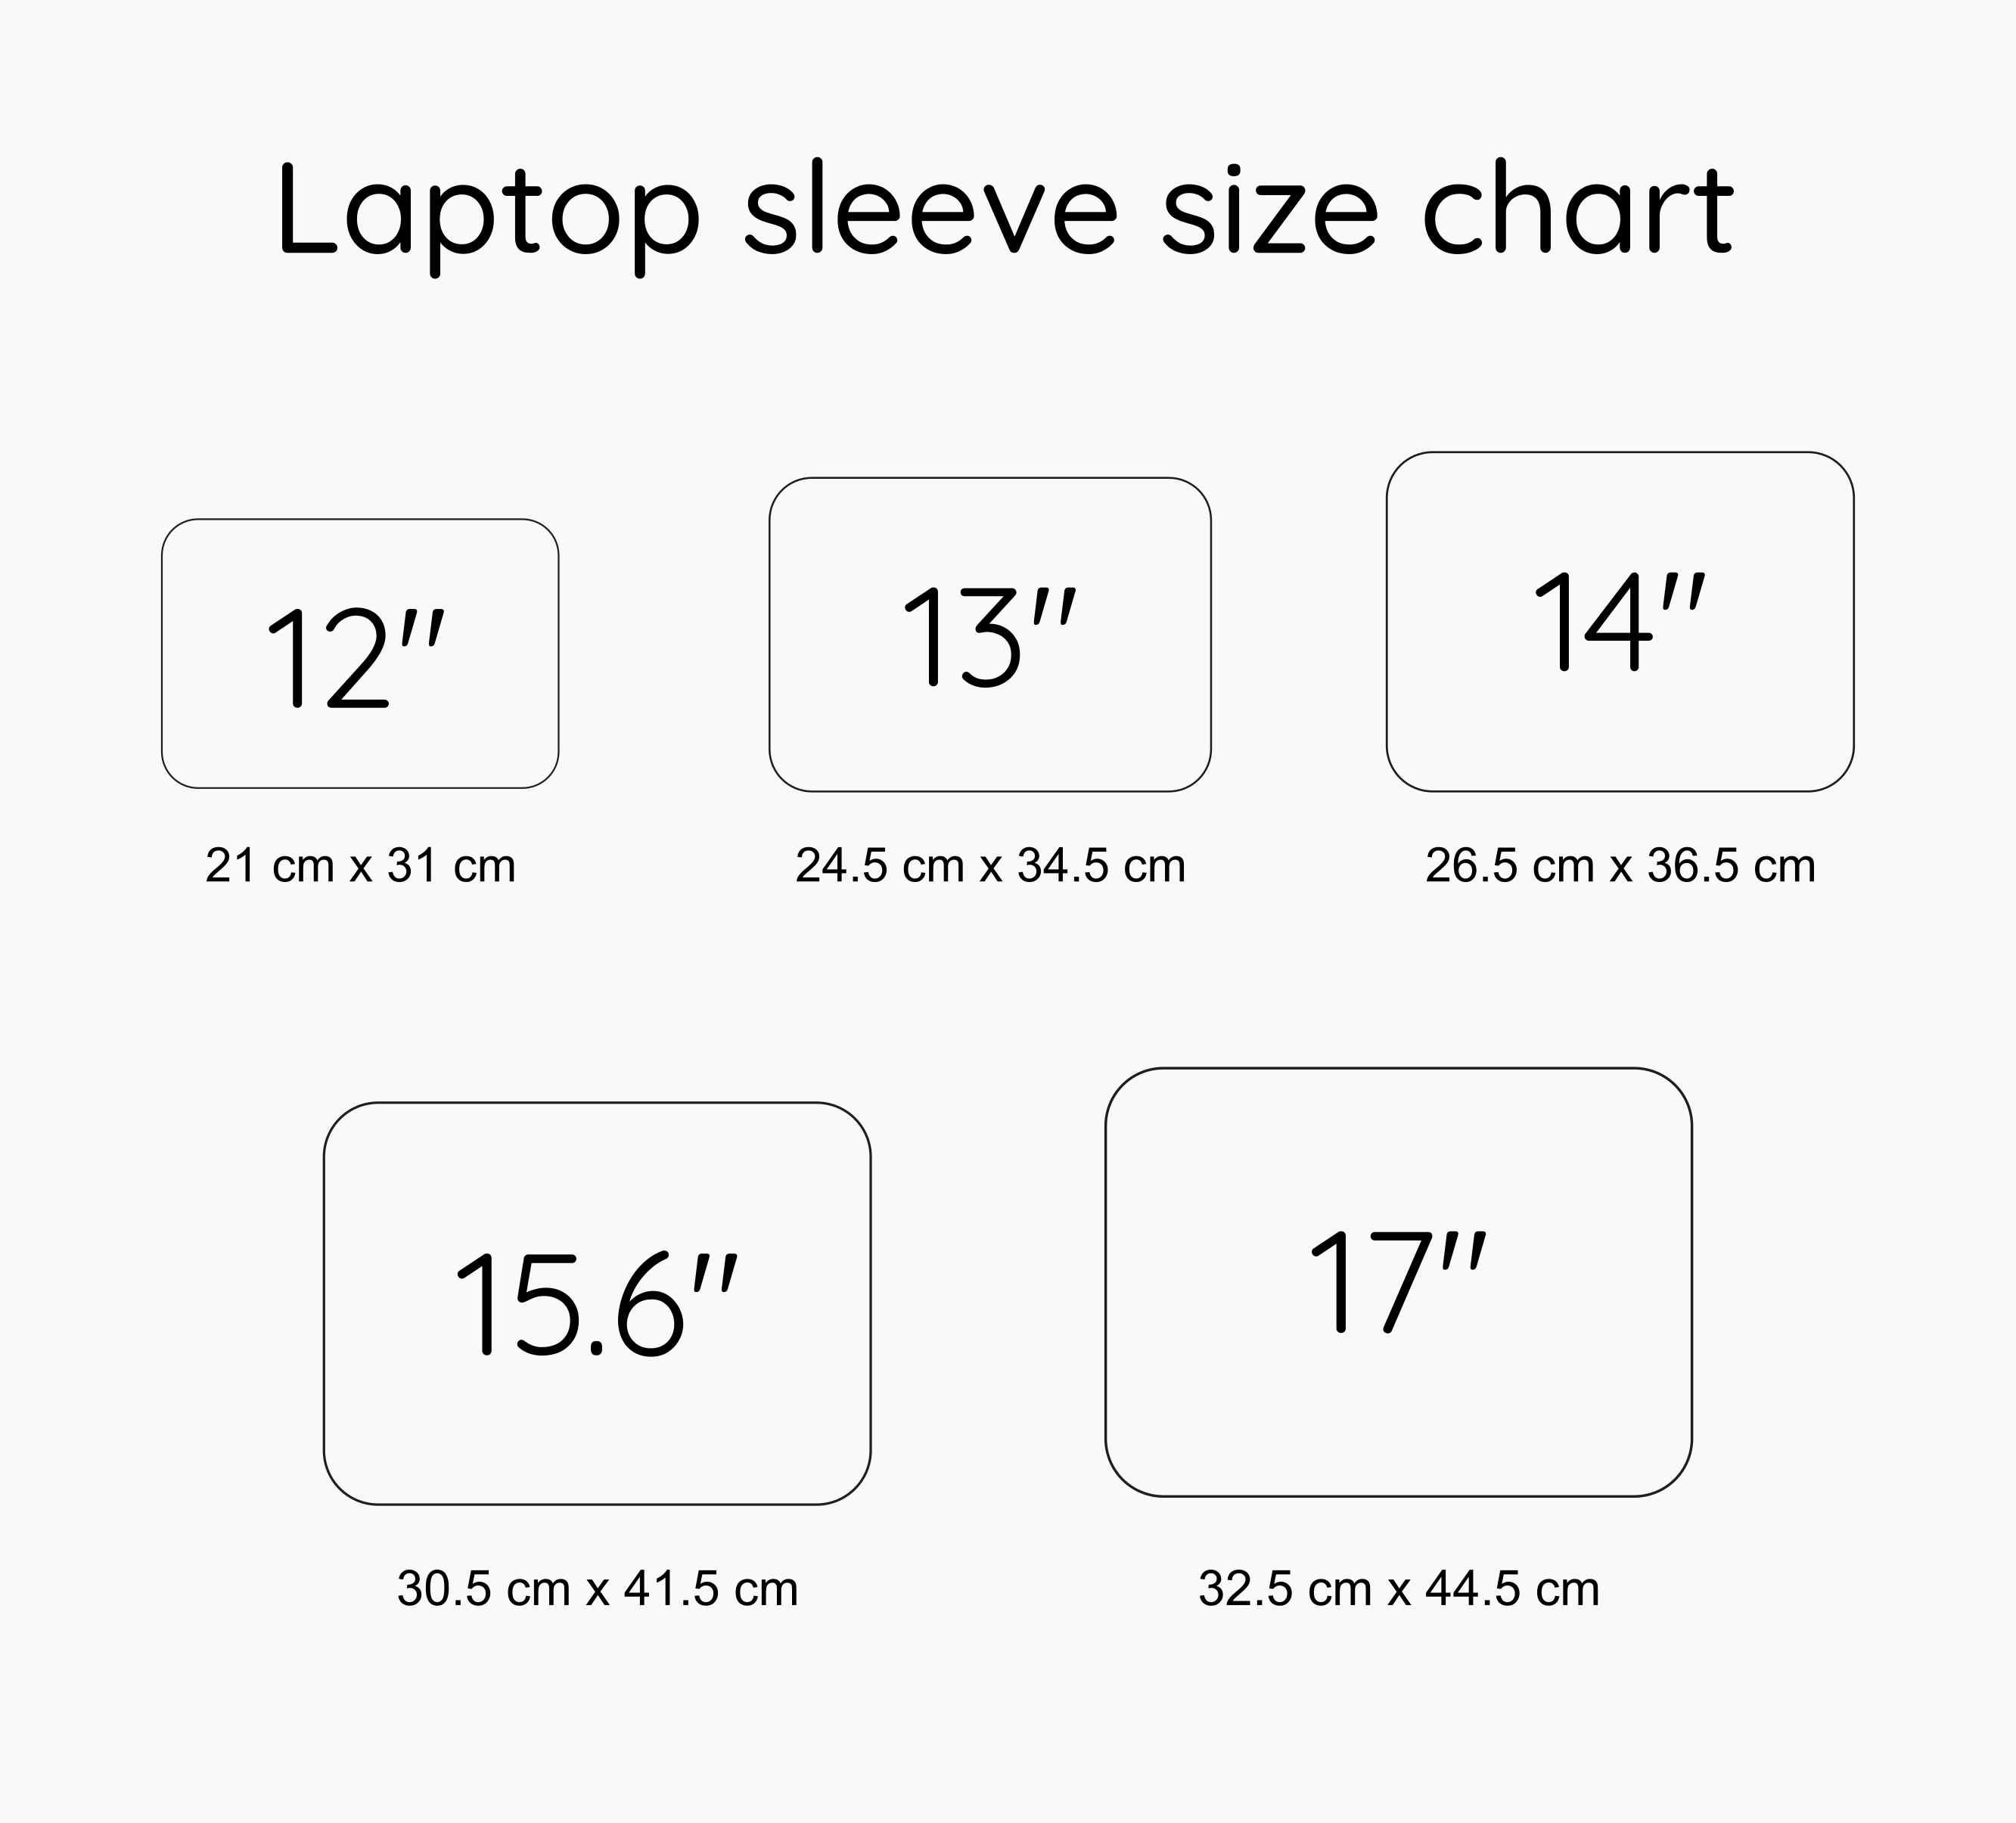 laptop sleeve size chart madd egypt